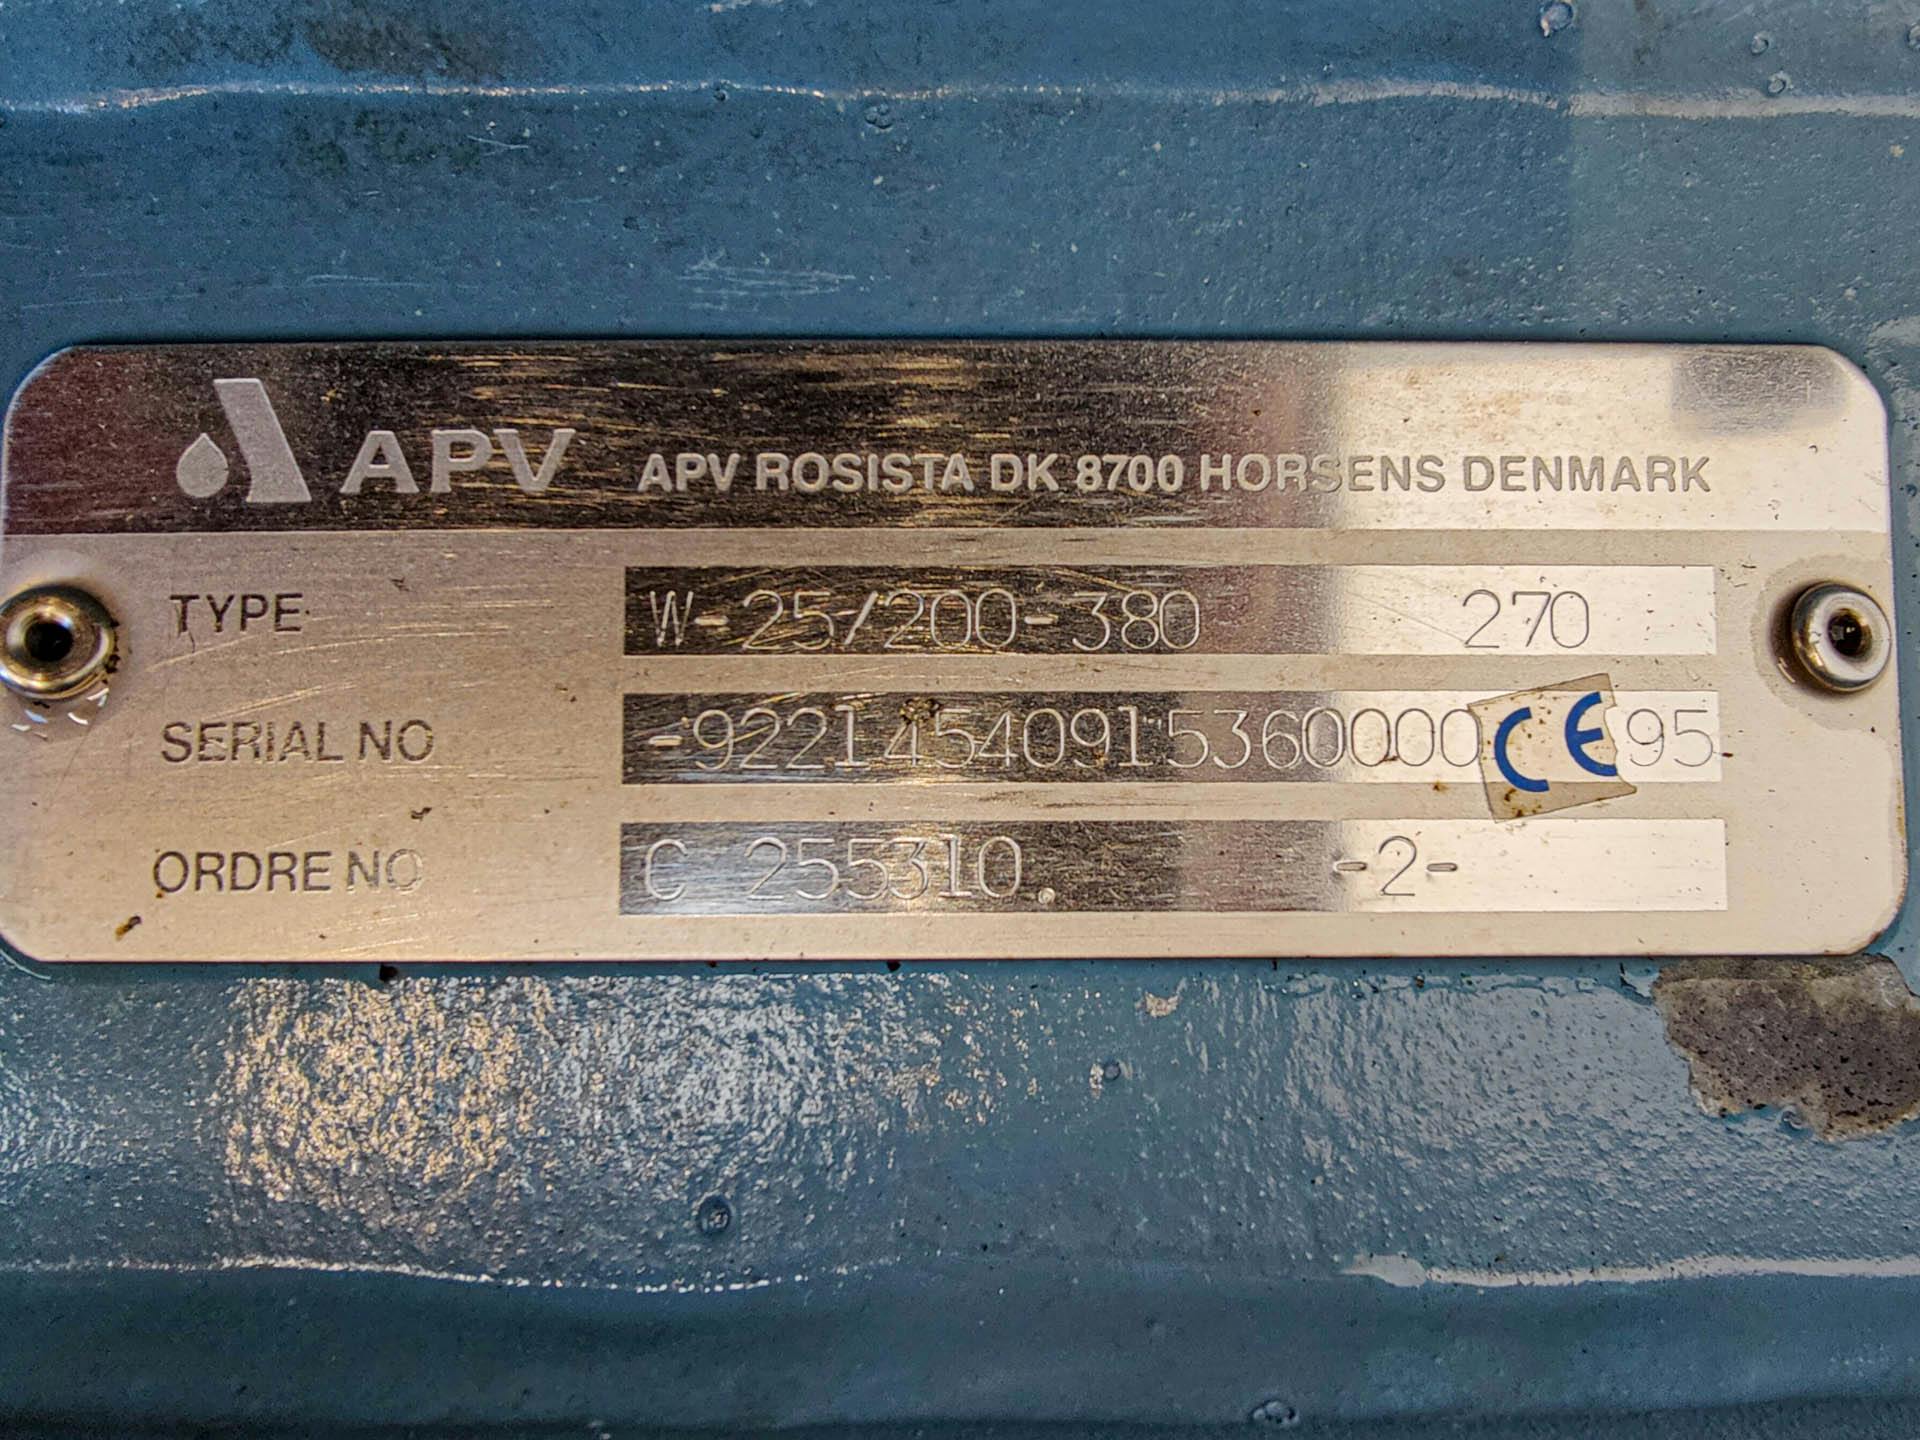 APV Rosista W-25/200-380 - Centrifugal Pump - image 5